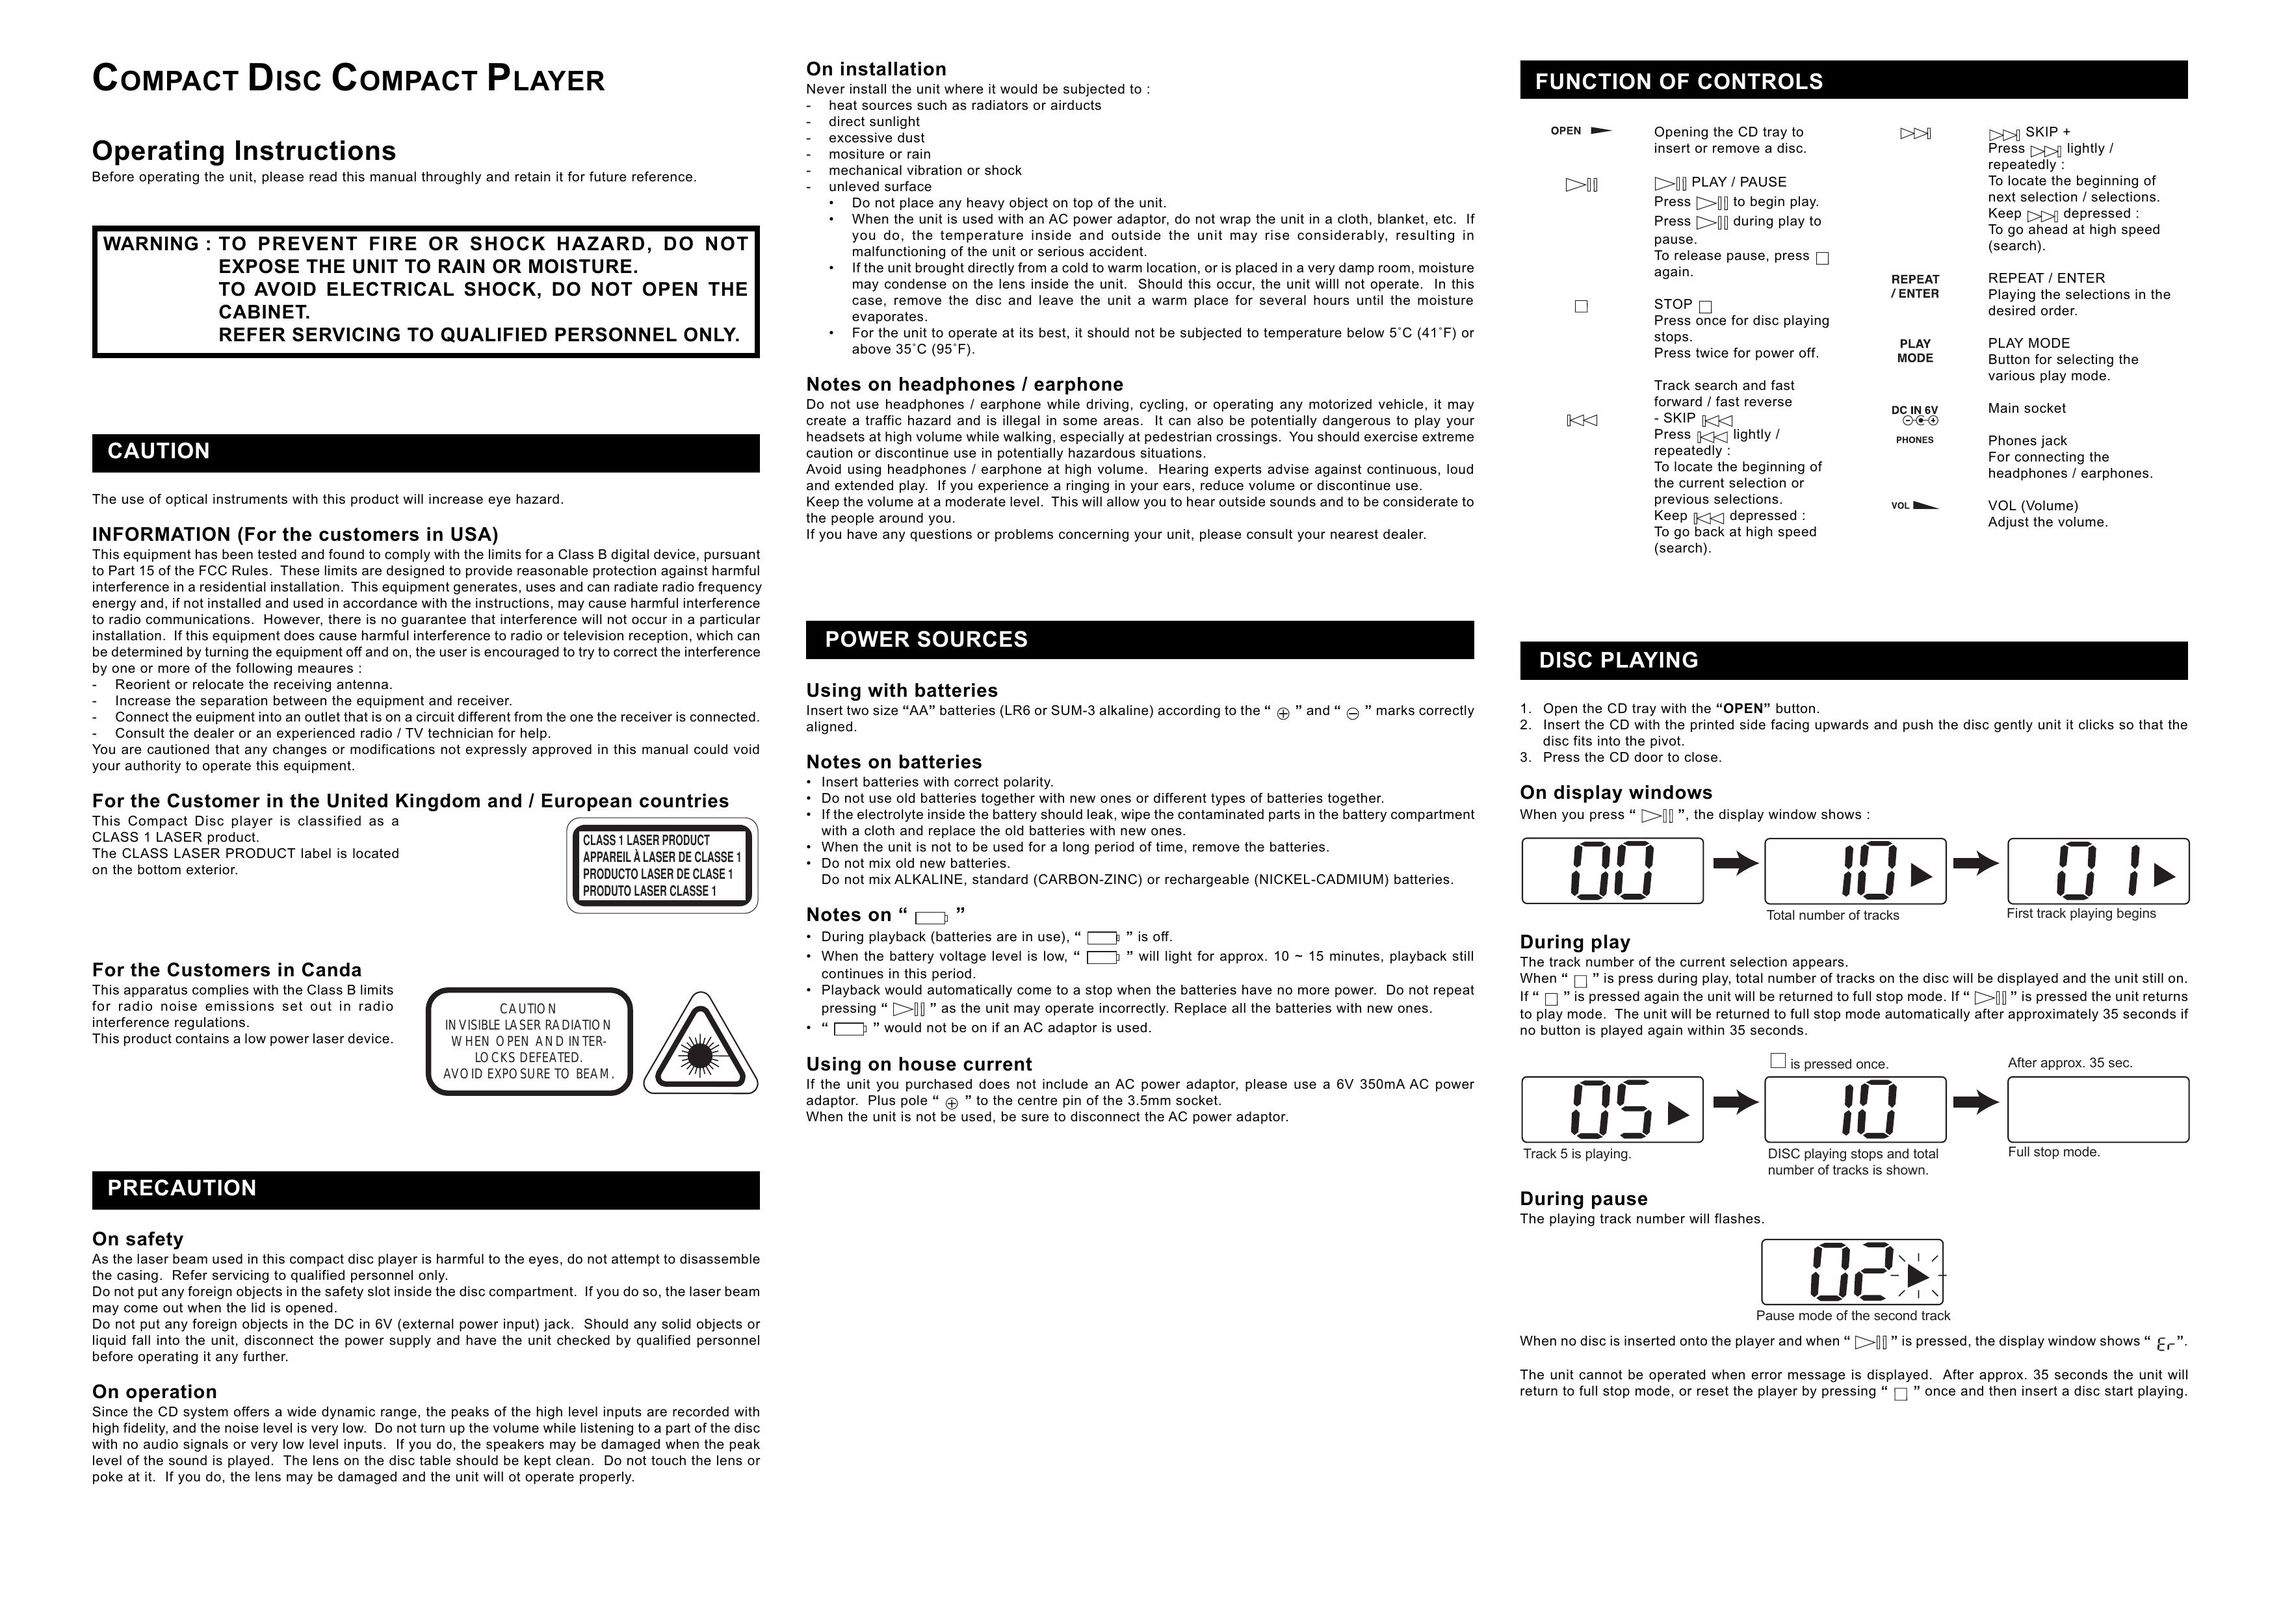 Audiovox 811-870091-170 CD Player User Manual